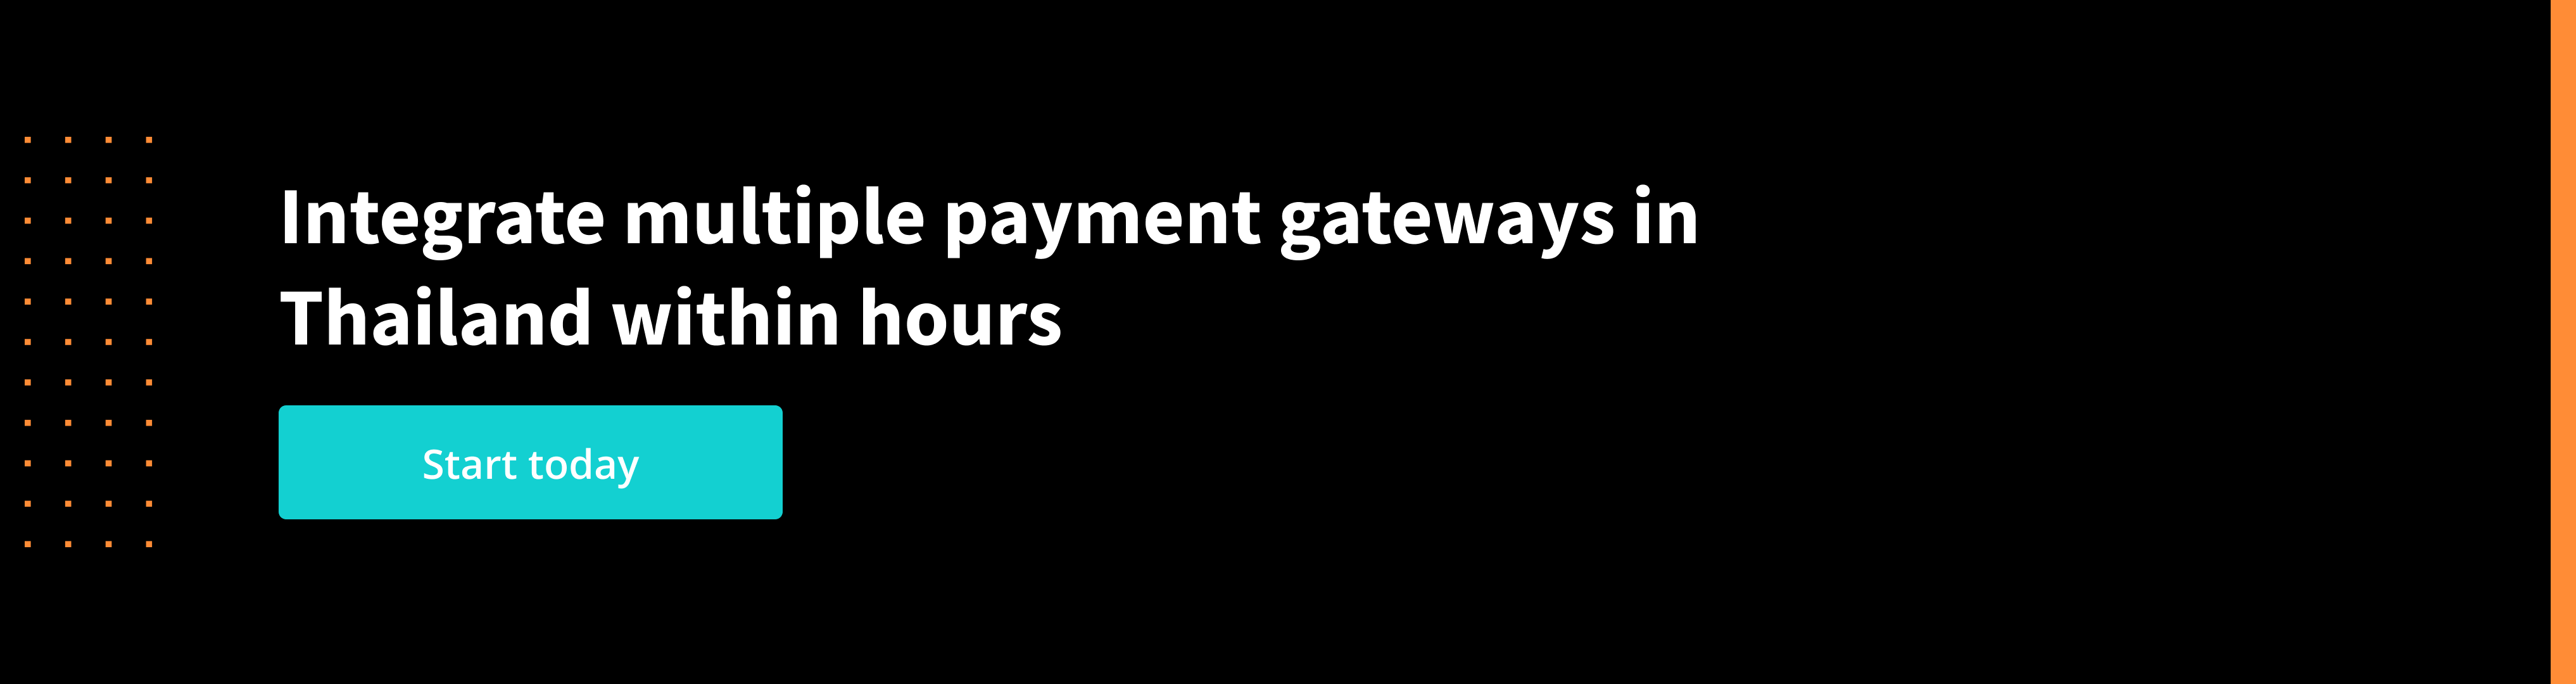 Integrate payment gateways in Thailand